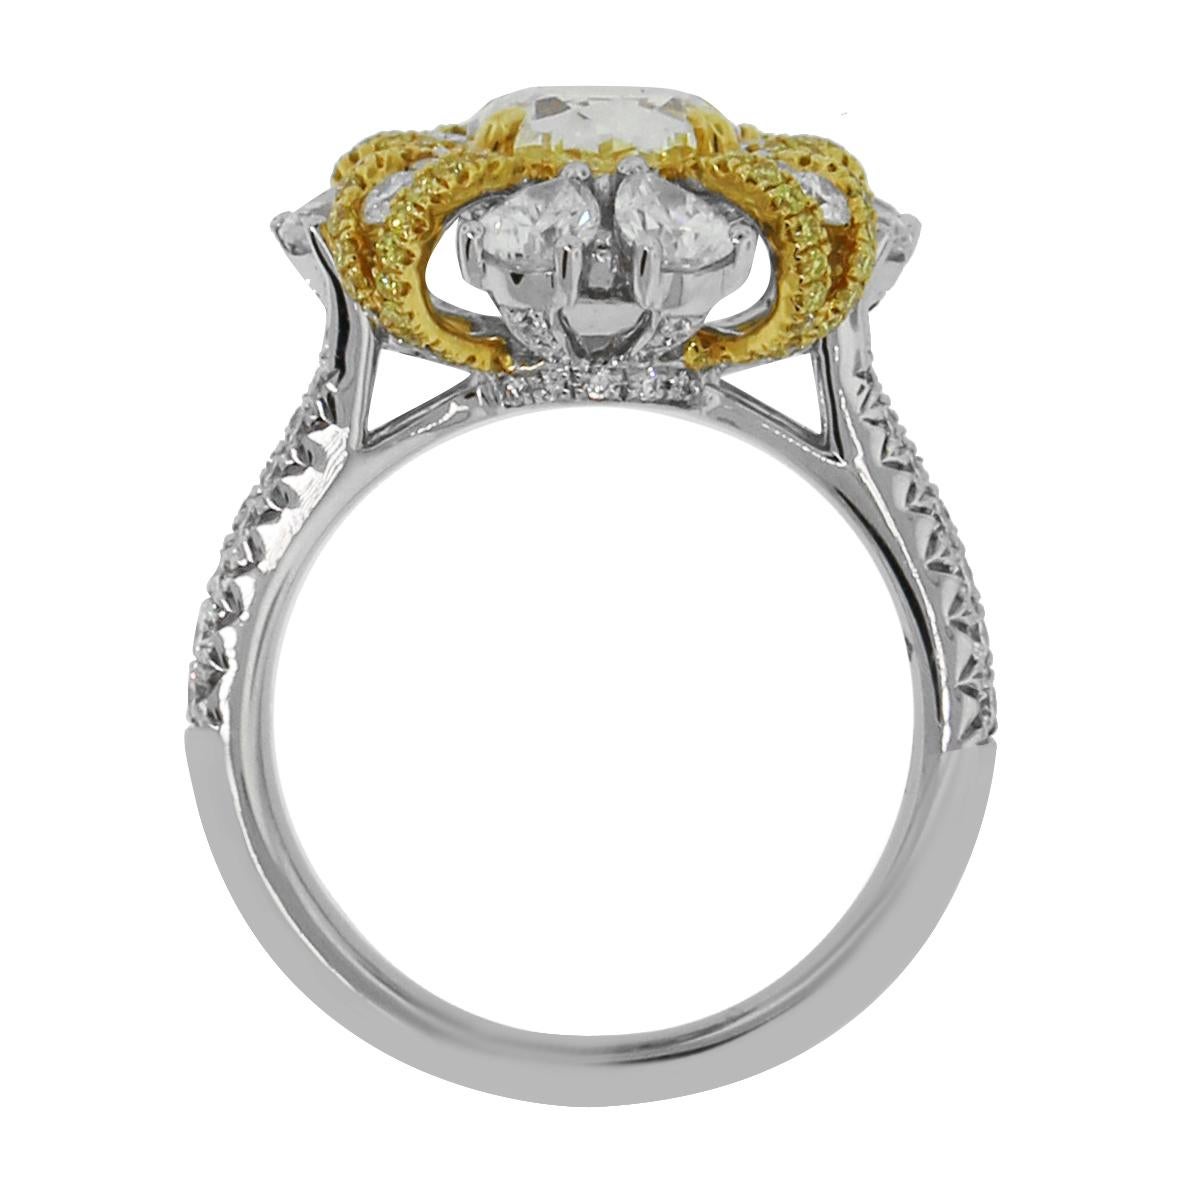 Oval Cut 2.48 Carat GIA Certified Diamond Ring